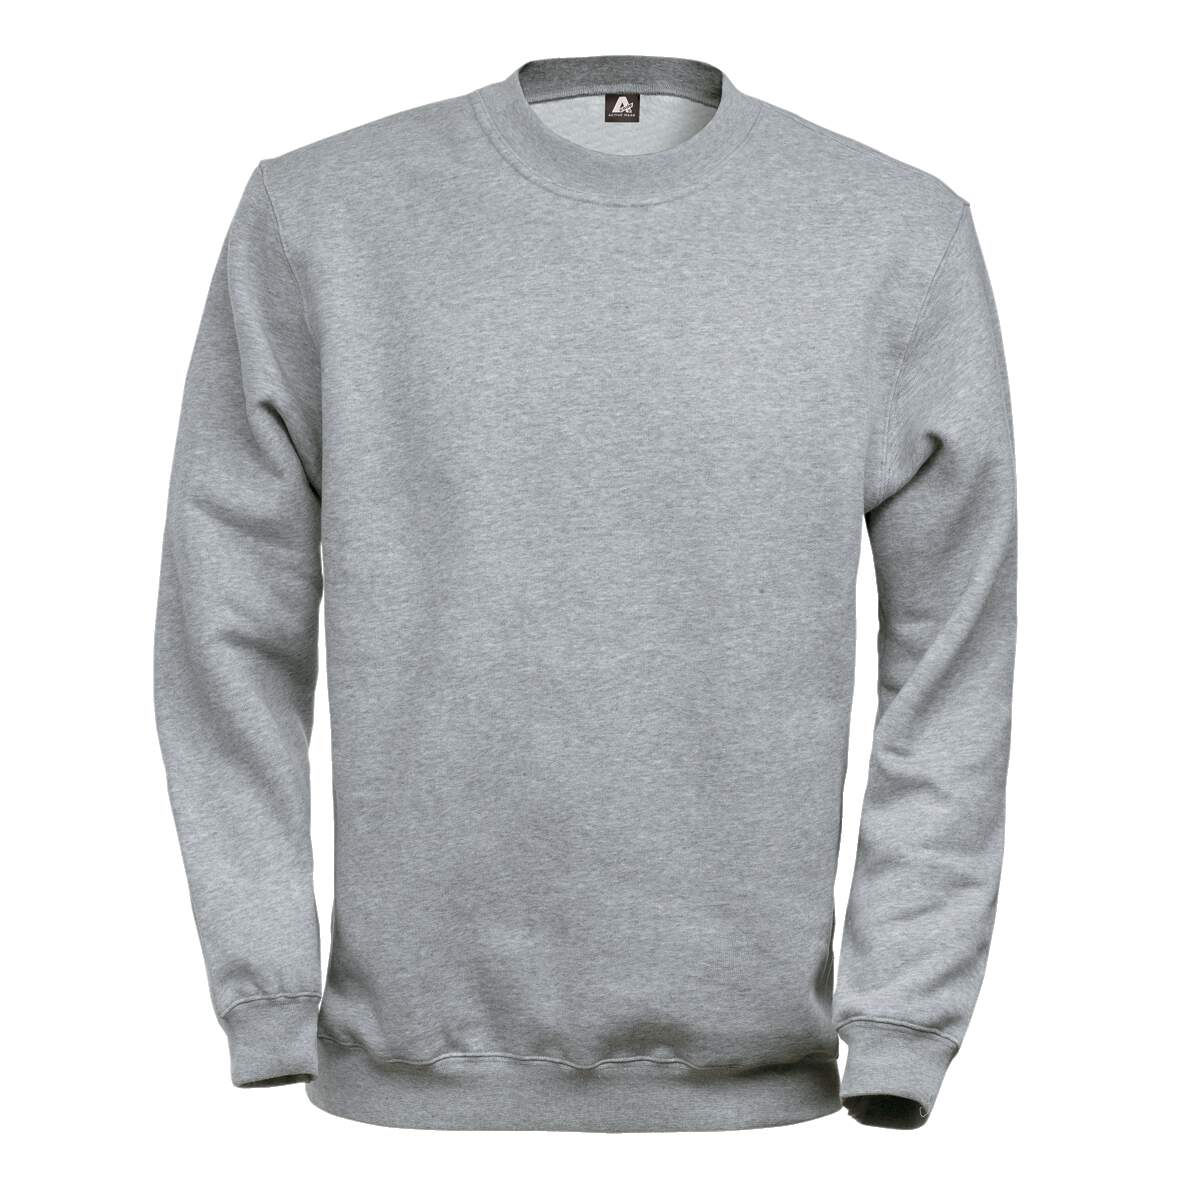 1181268 - Sweatshirt grau meliert 100225